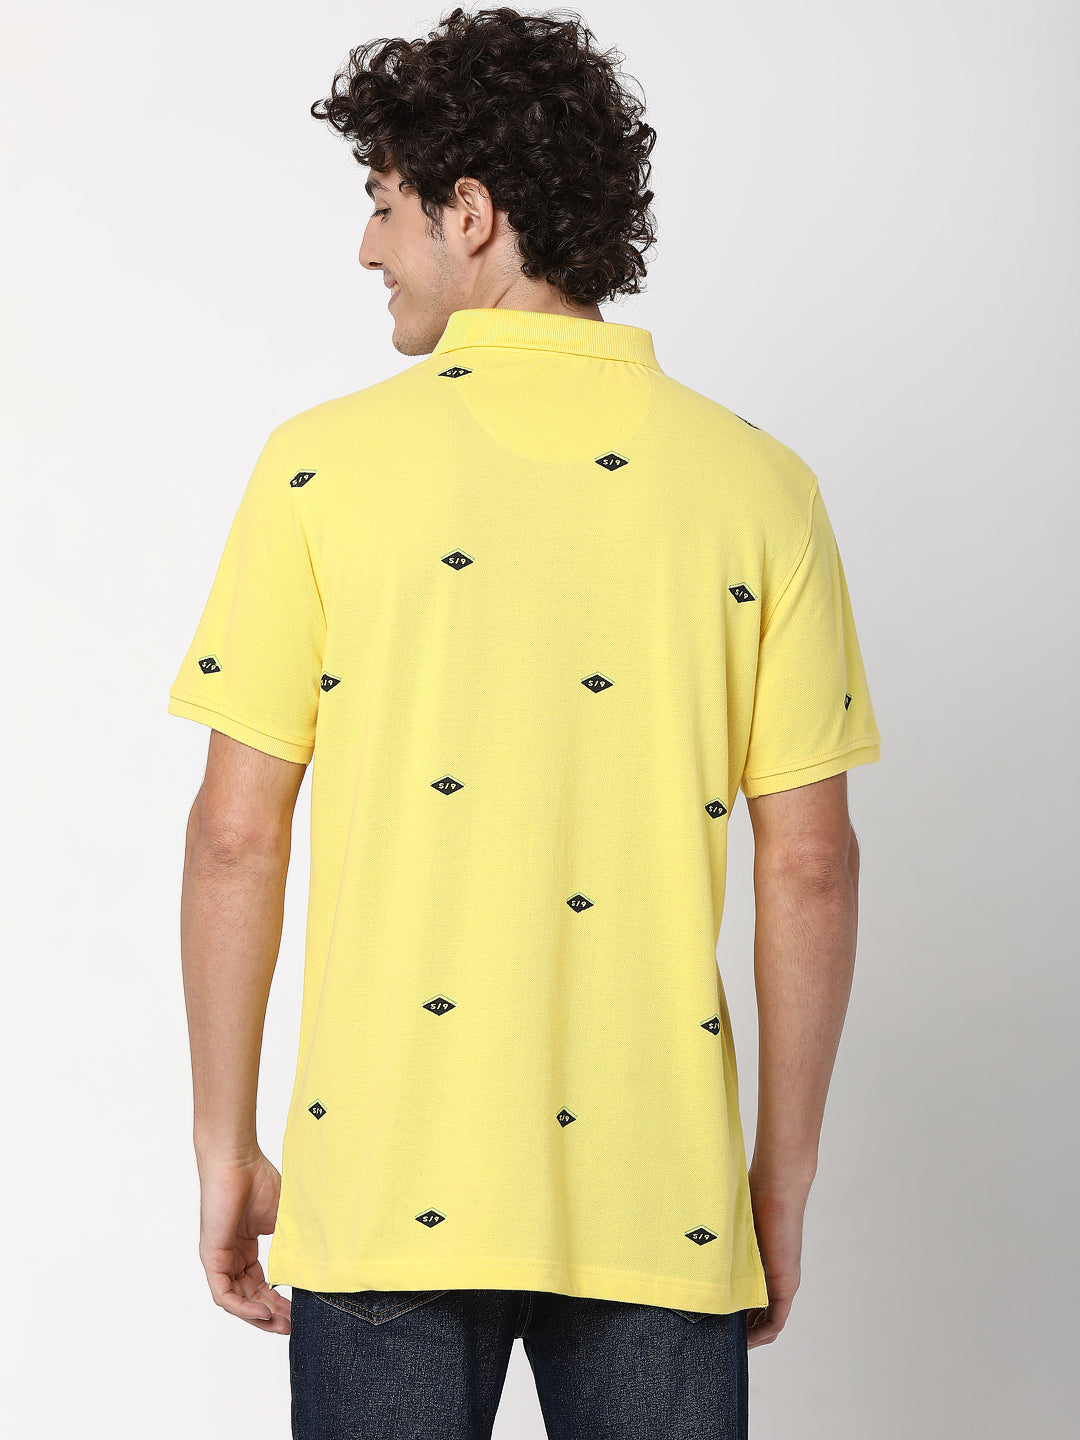 Spykar Men Pastel Yellow Cotton Printed Casual Polo Tshirt